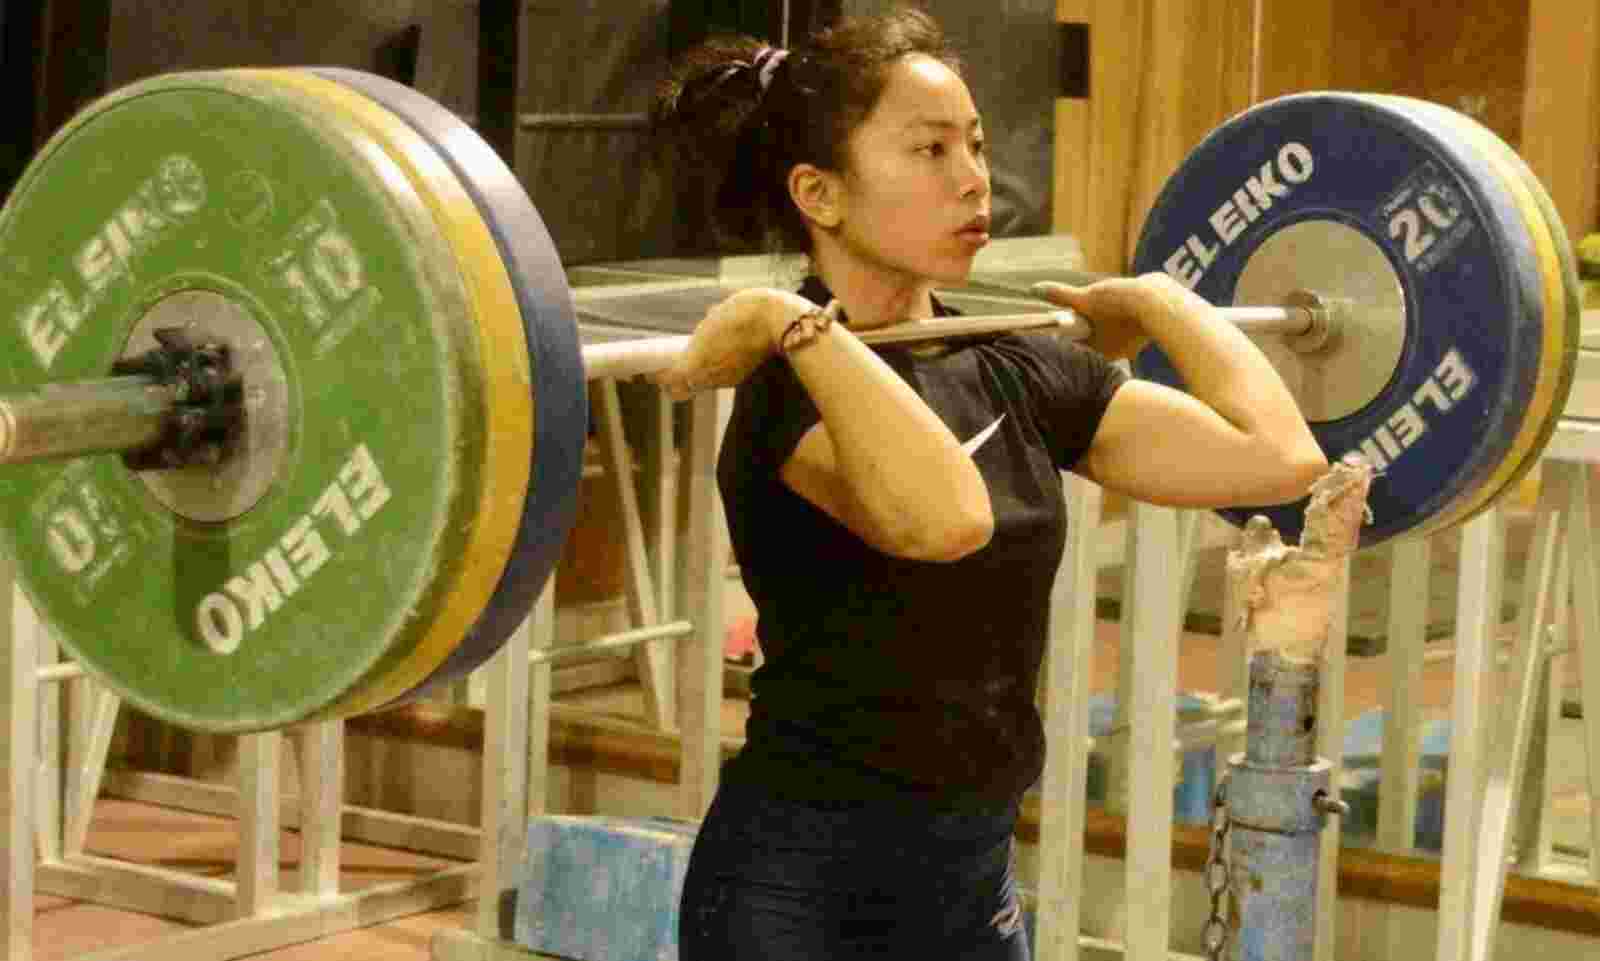 Indian weightlifter Mirabai Chanu